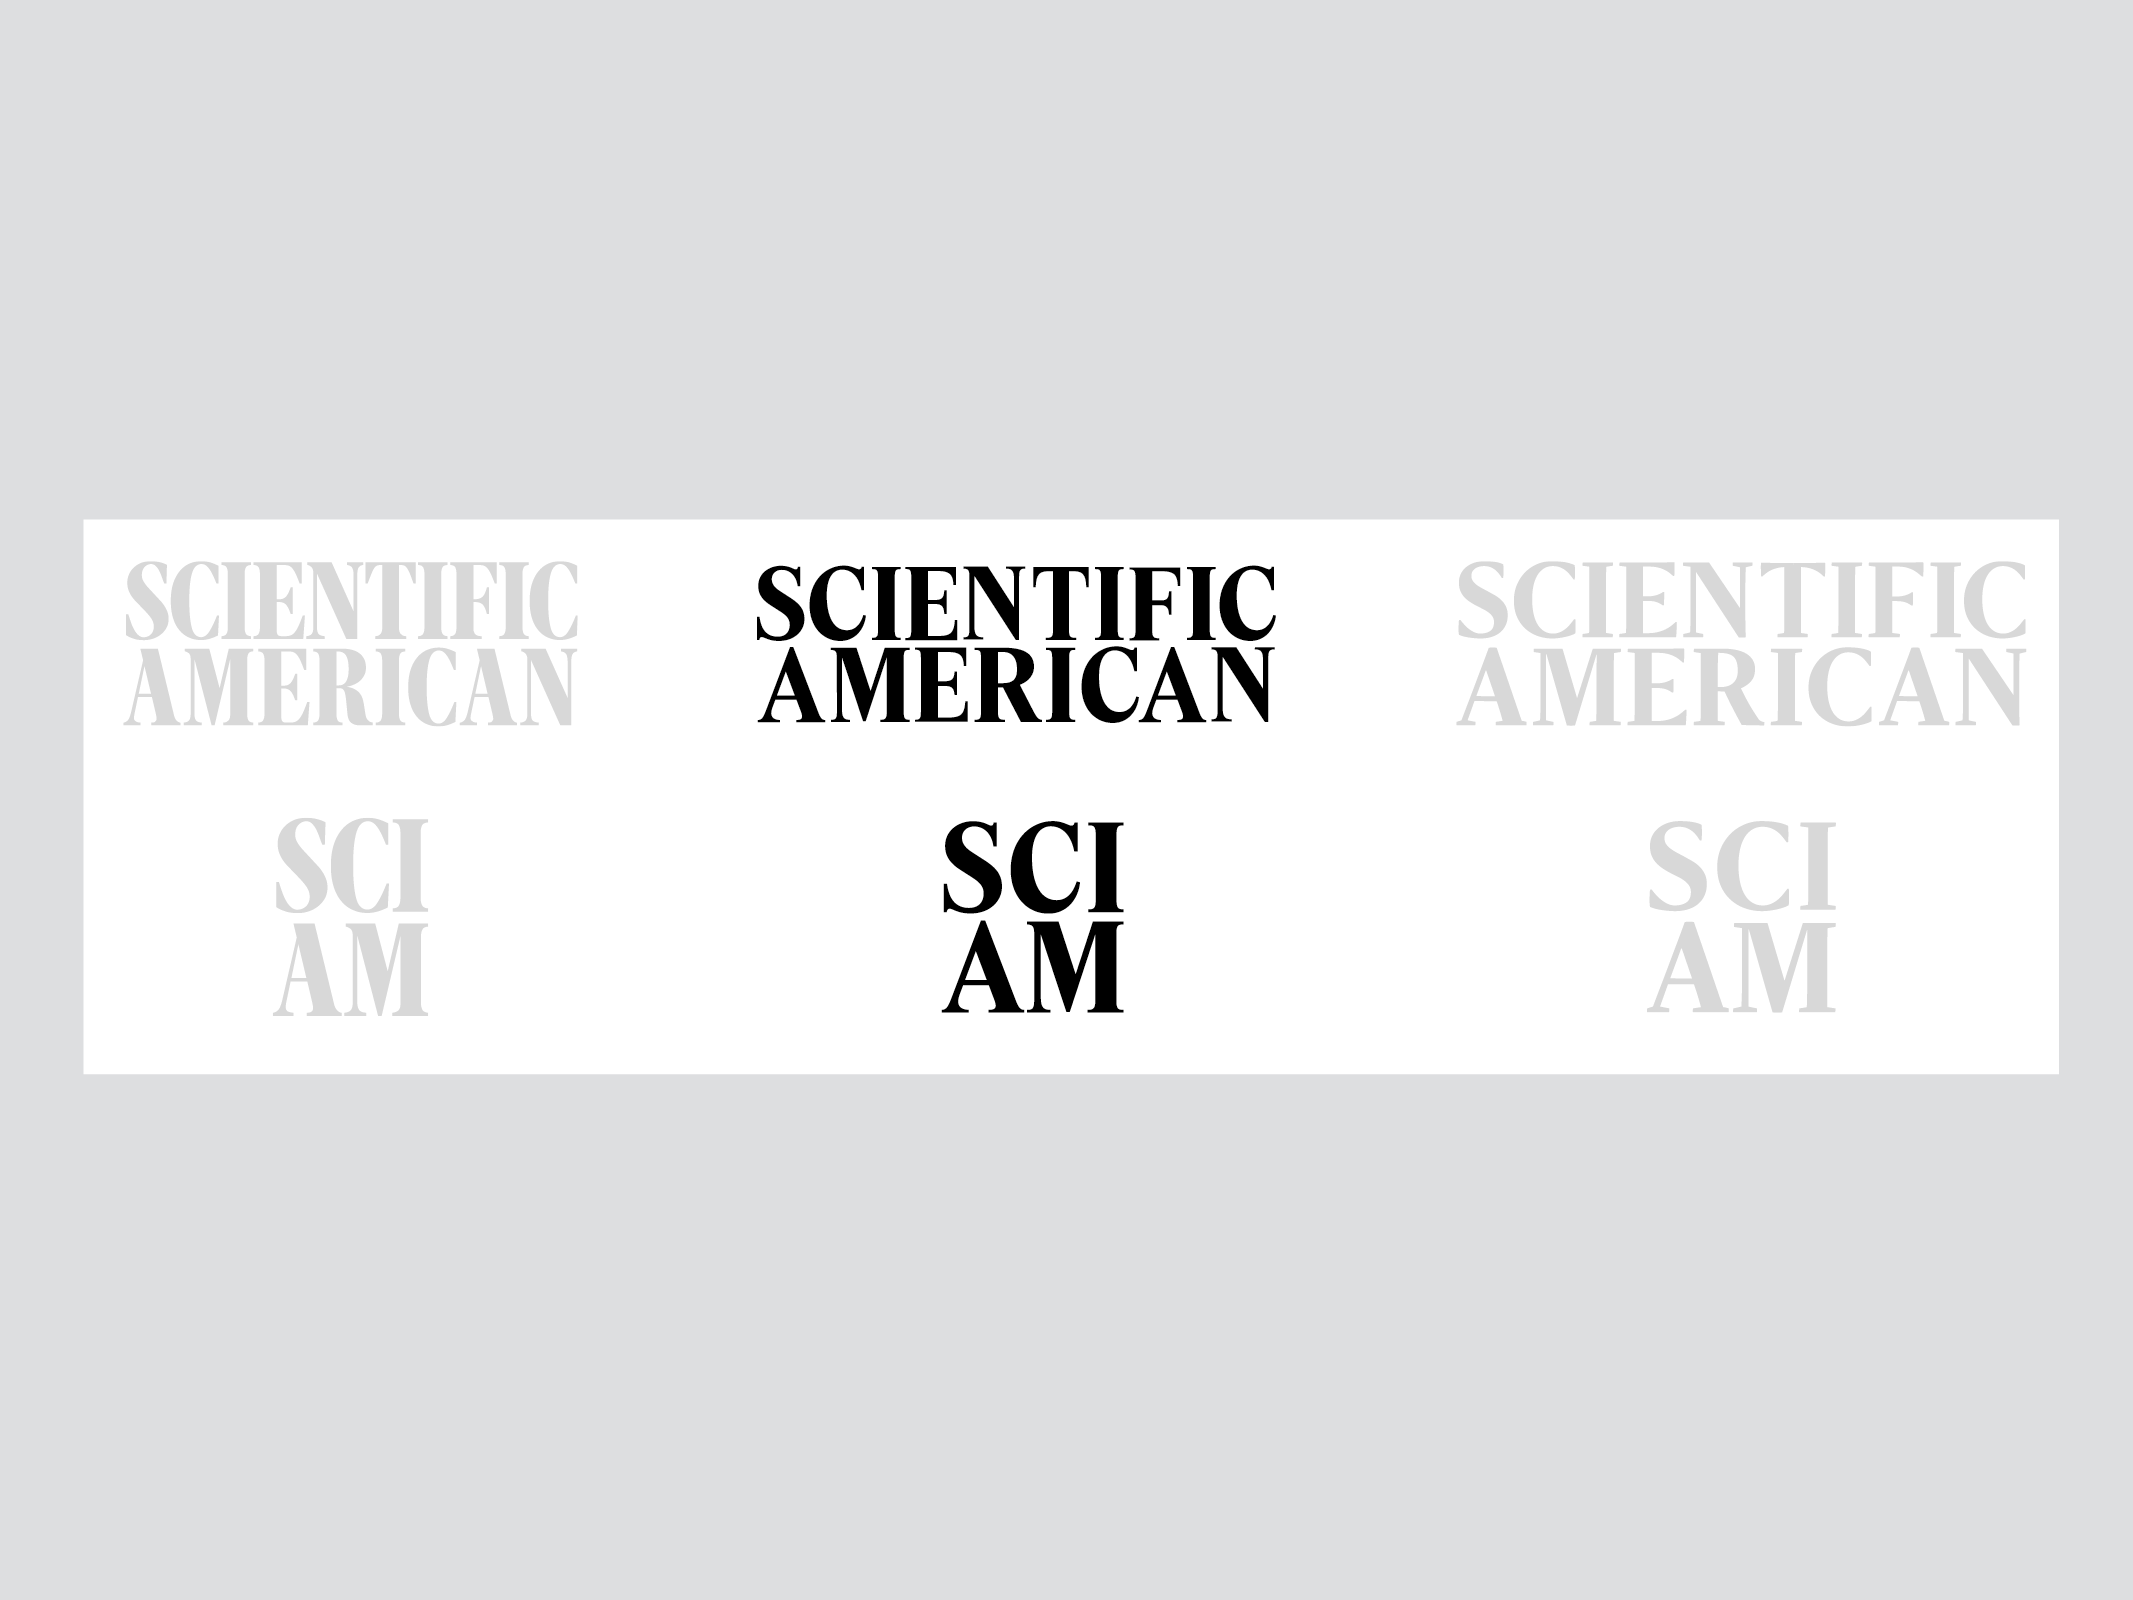 Six different Scientific American logos.